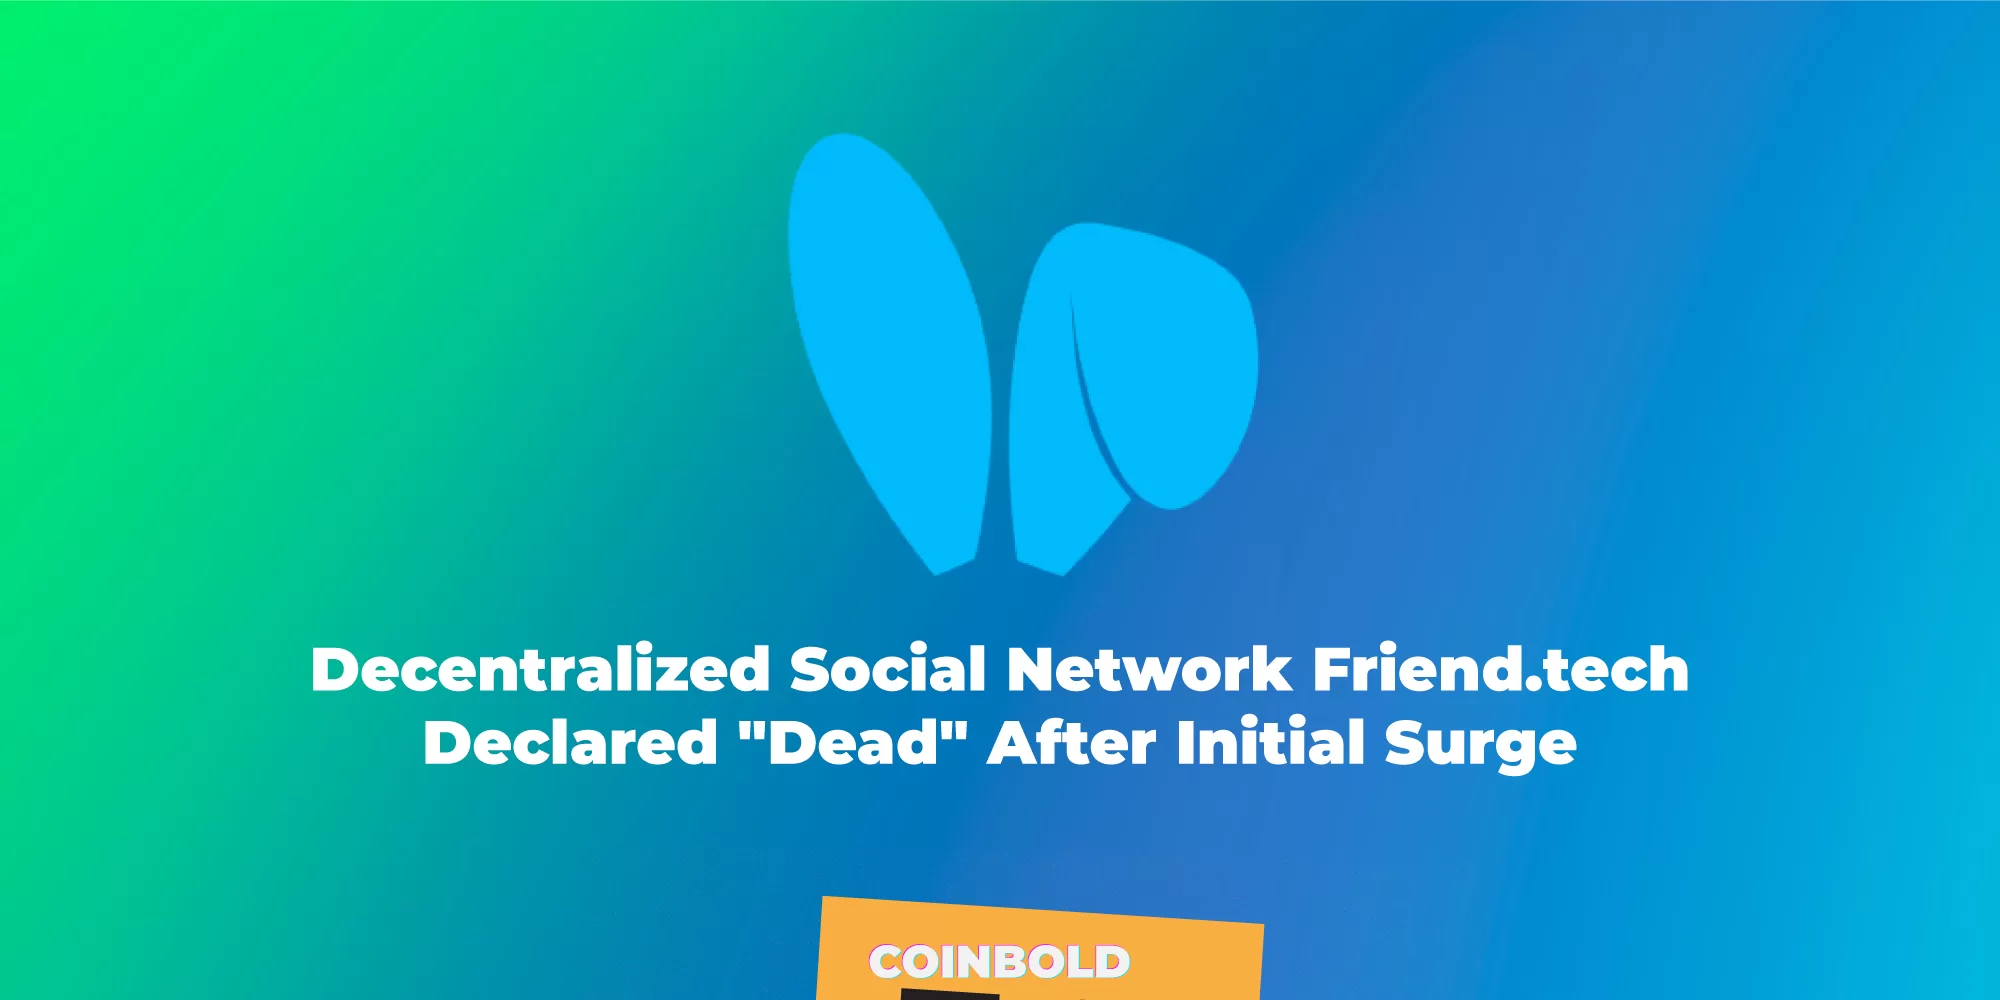 Decentralized Social Network Friend.tech Declared Dead After Initial Surge